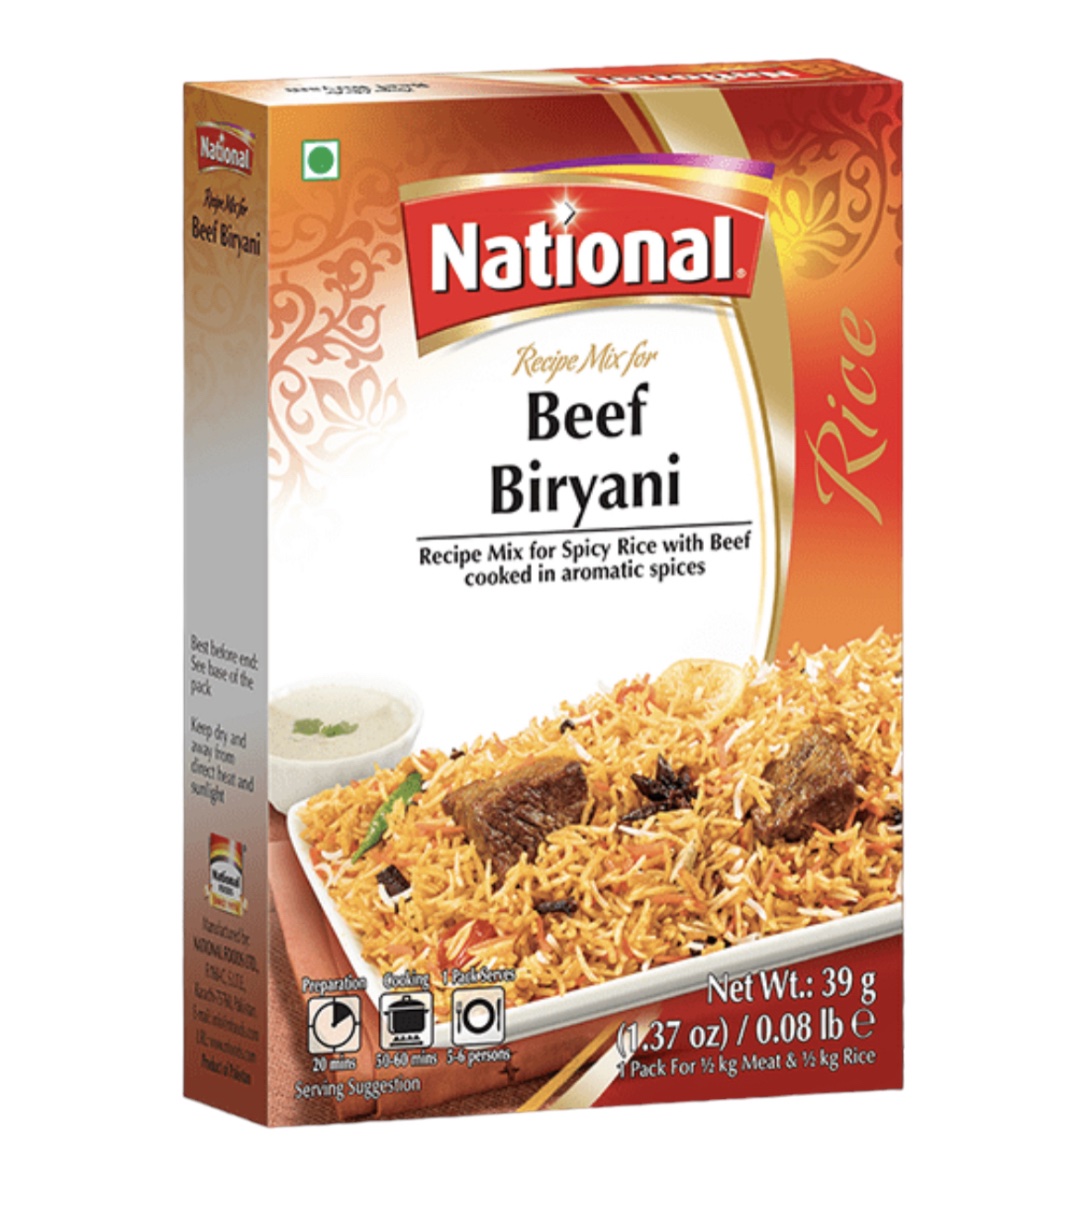 National Foods Beef Biryani Recipe Mix 1.37 oz (39g)X2=78g